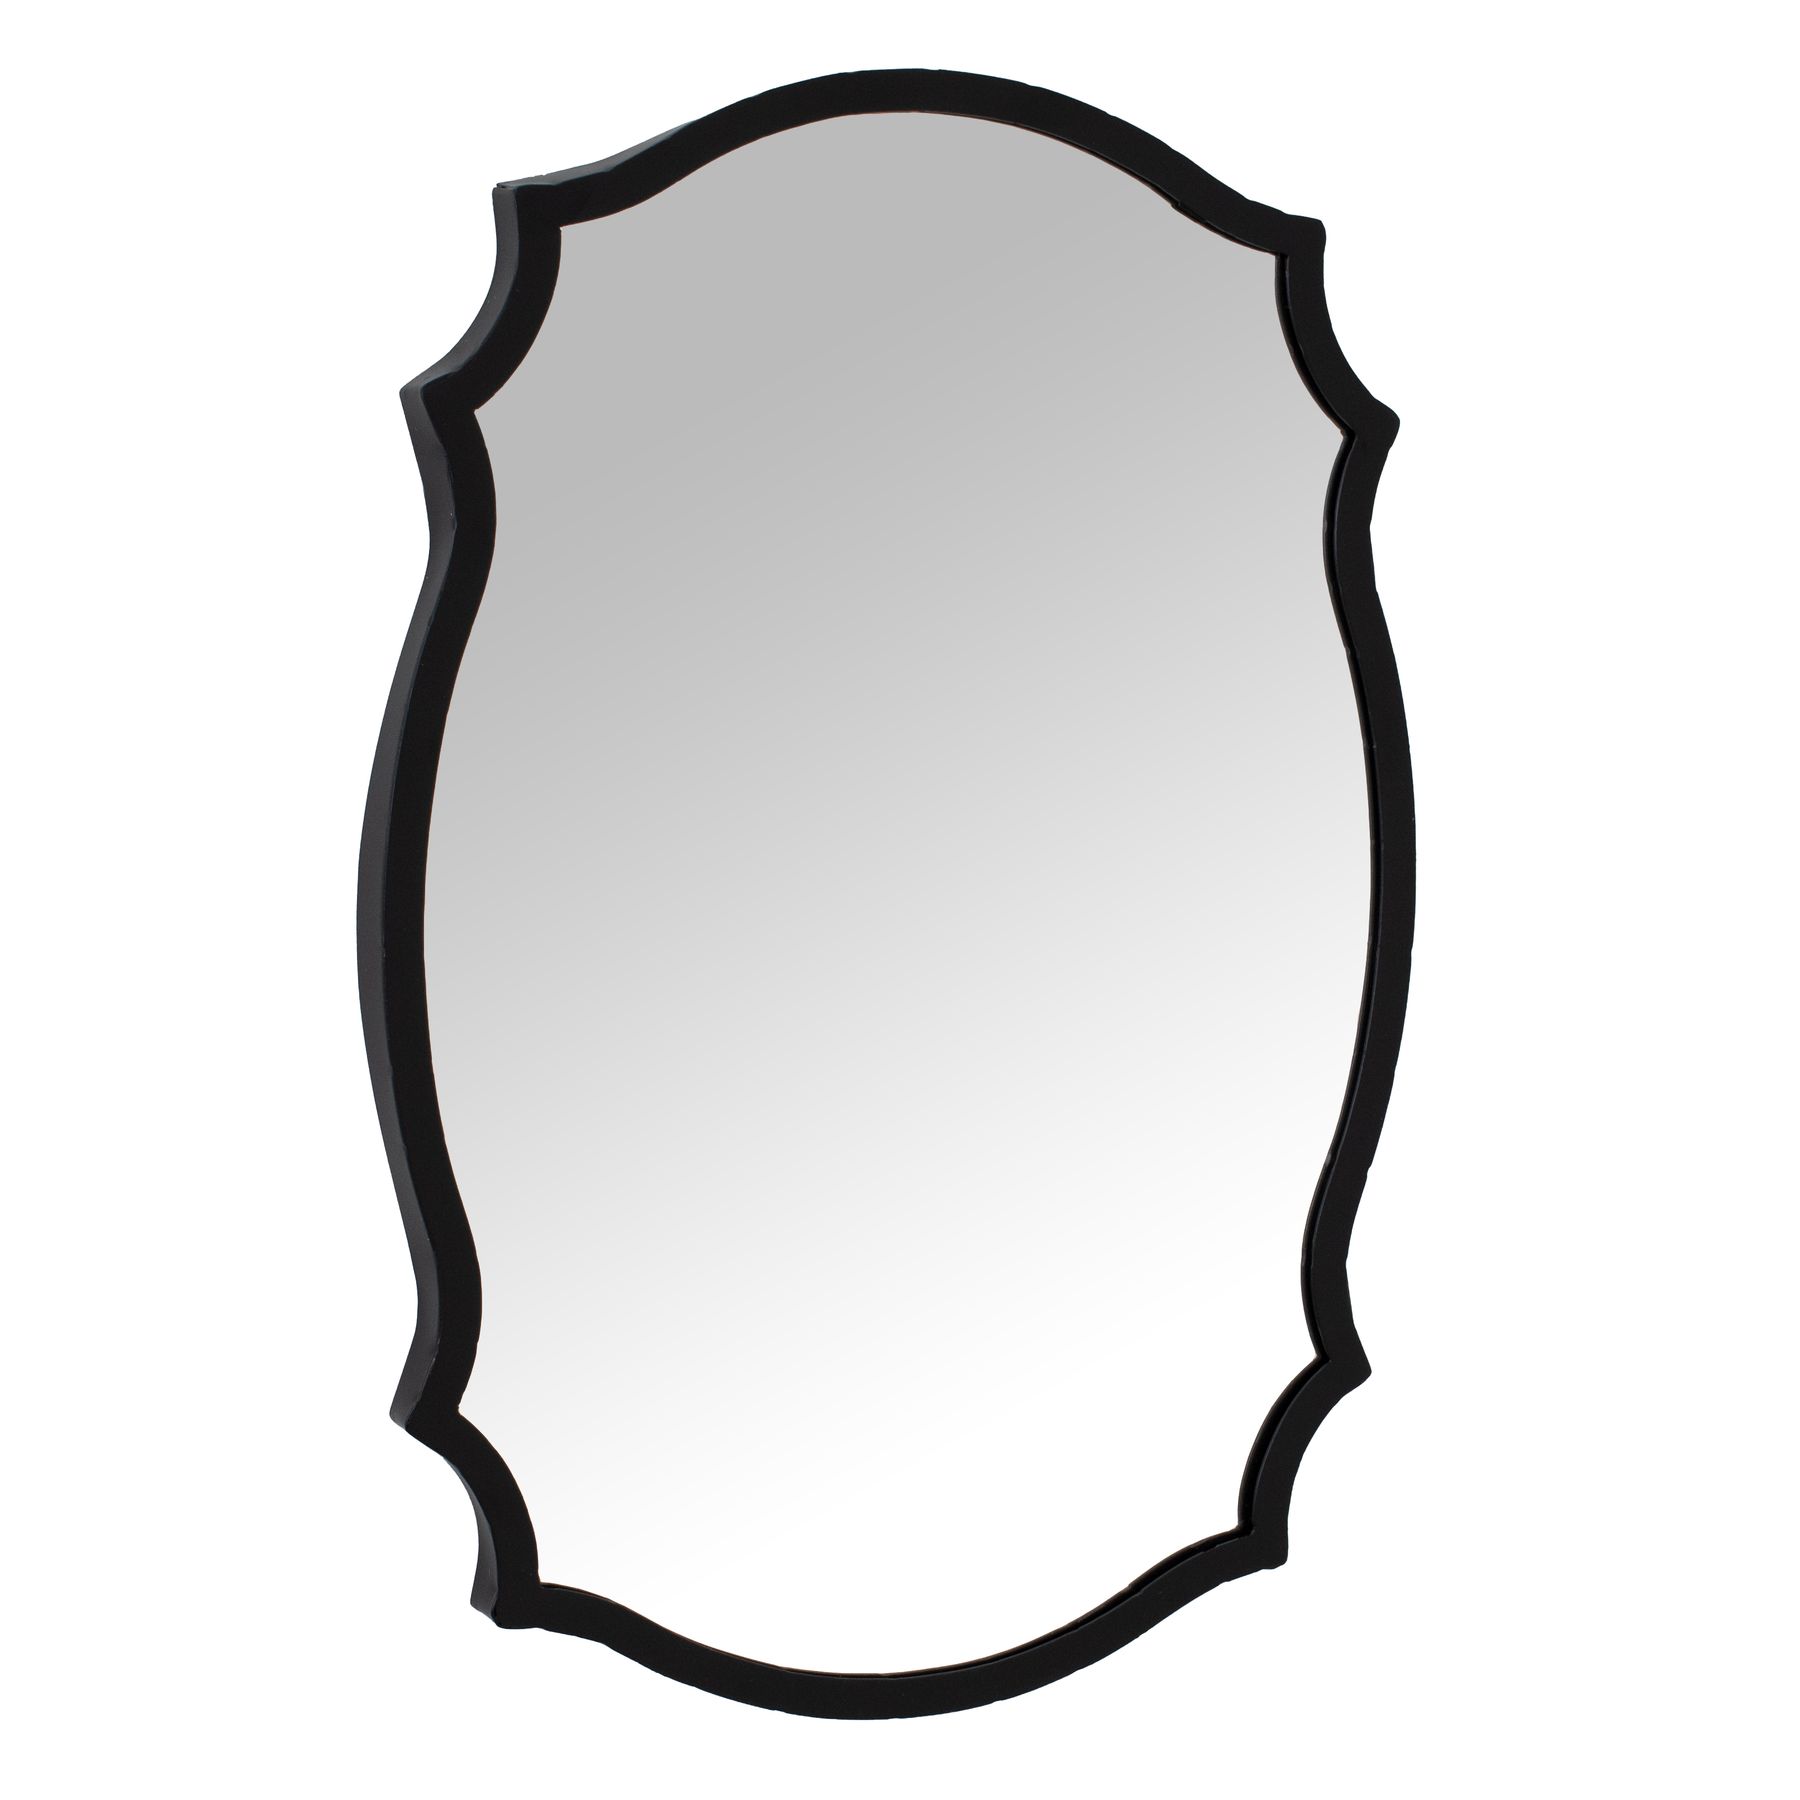 Matt Black Ornate Curved Mirror - Image 1